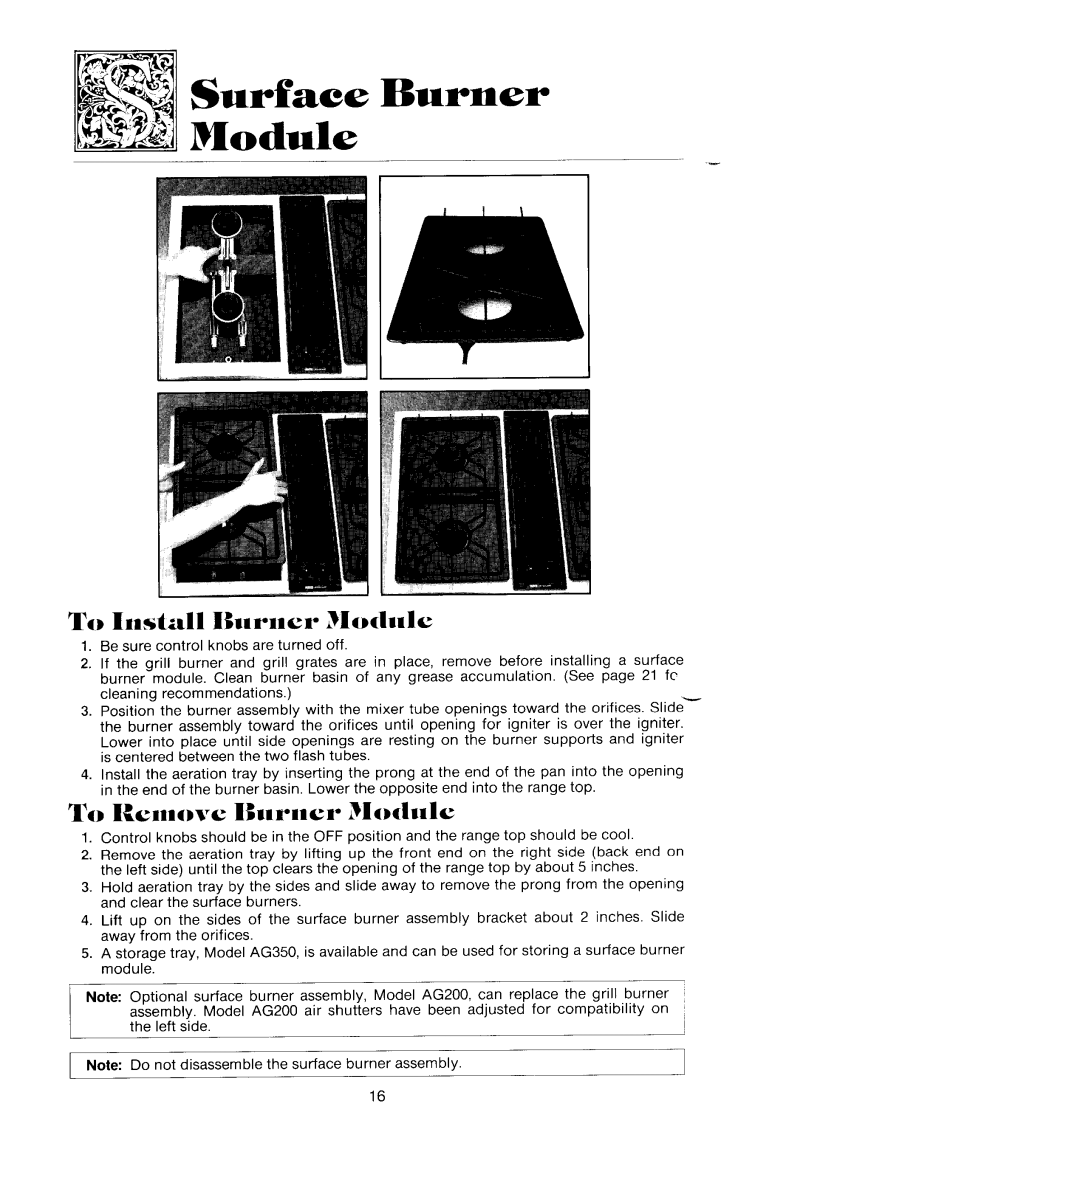 Jenn-Air SEG196 manual ModuleSurface Burner, To hnstall IBurner Module, To Rcn.ove Burner Module 